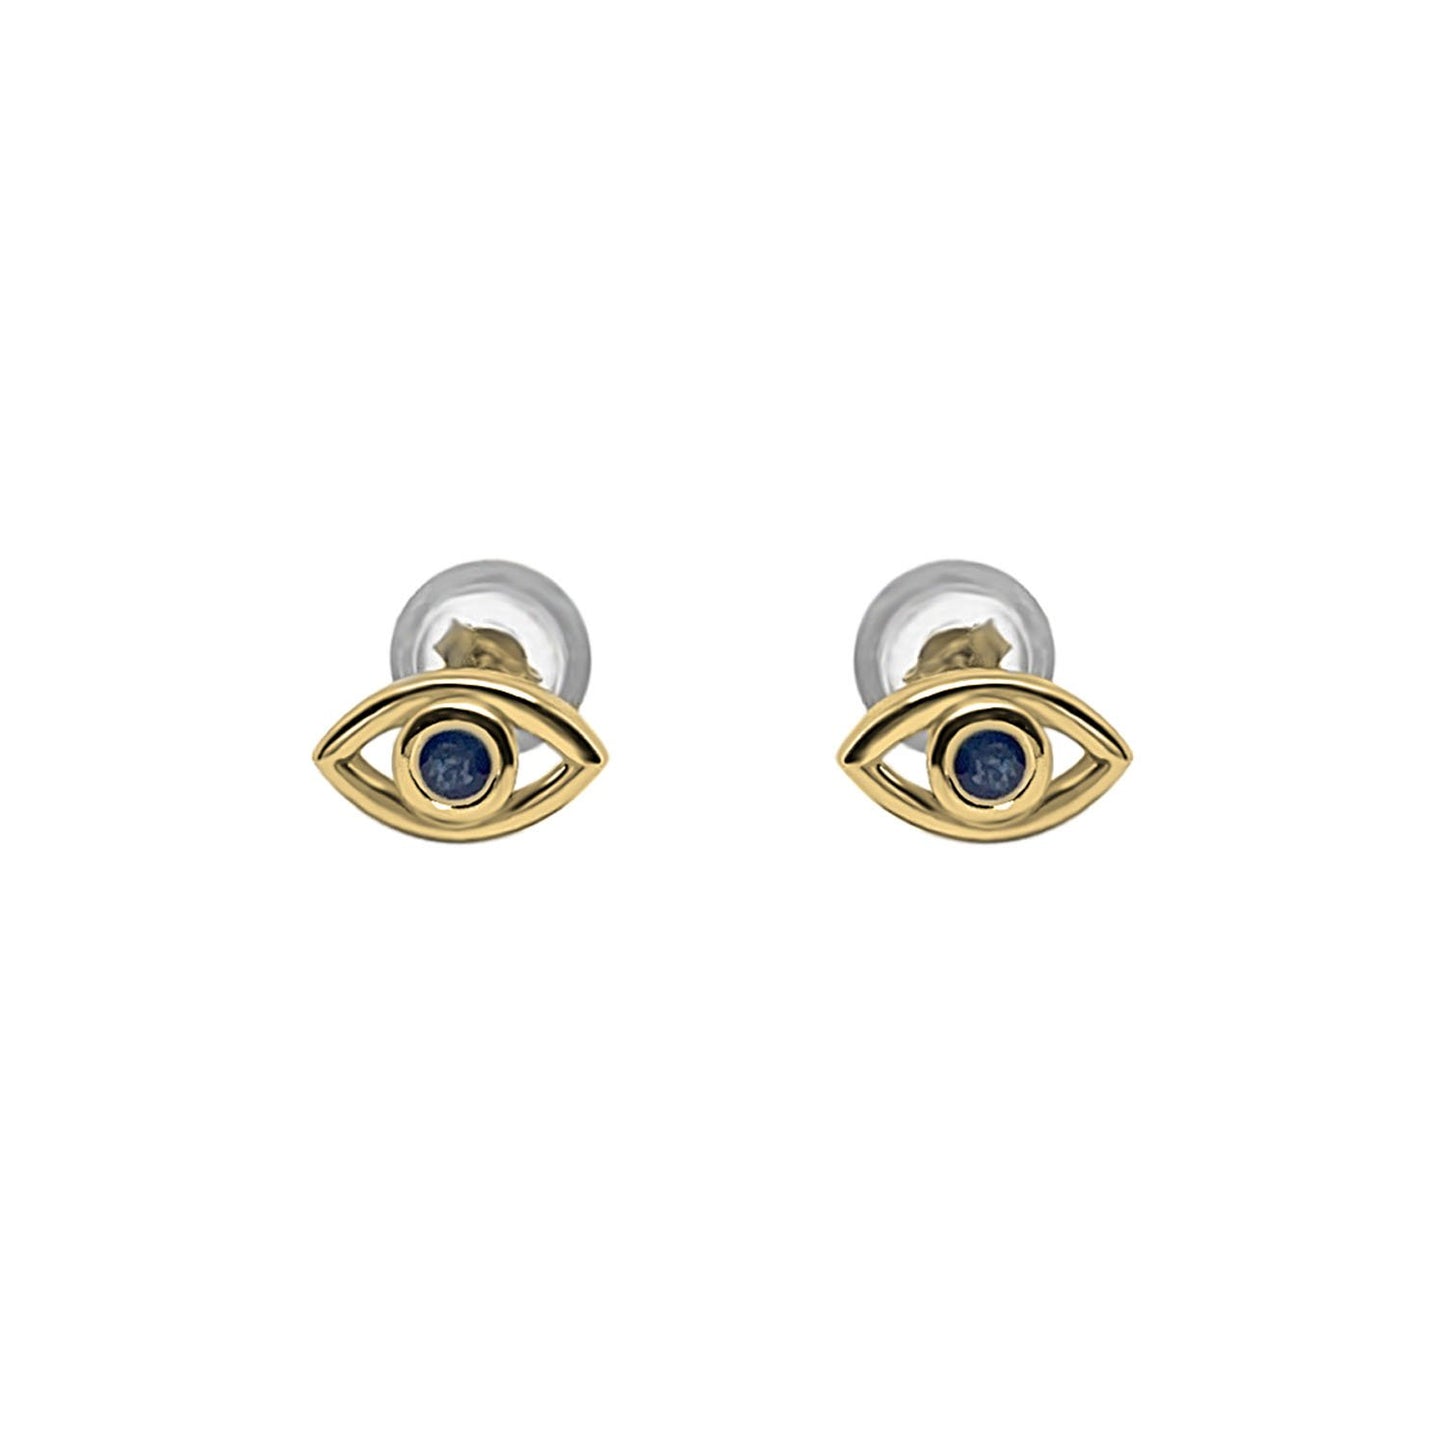 eye stud earrings blue sapphire stone 18k gold vermeil classic style kemmi collection